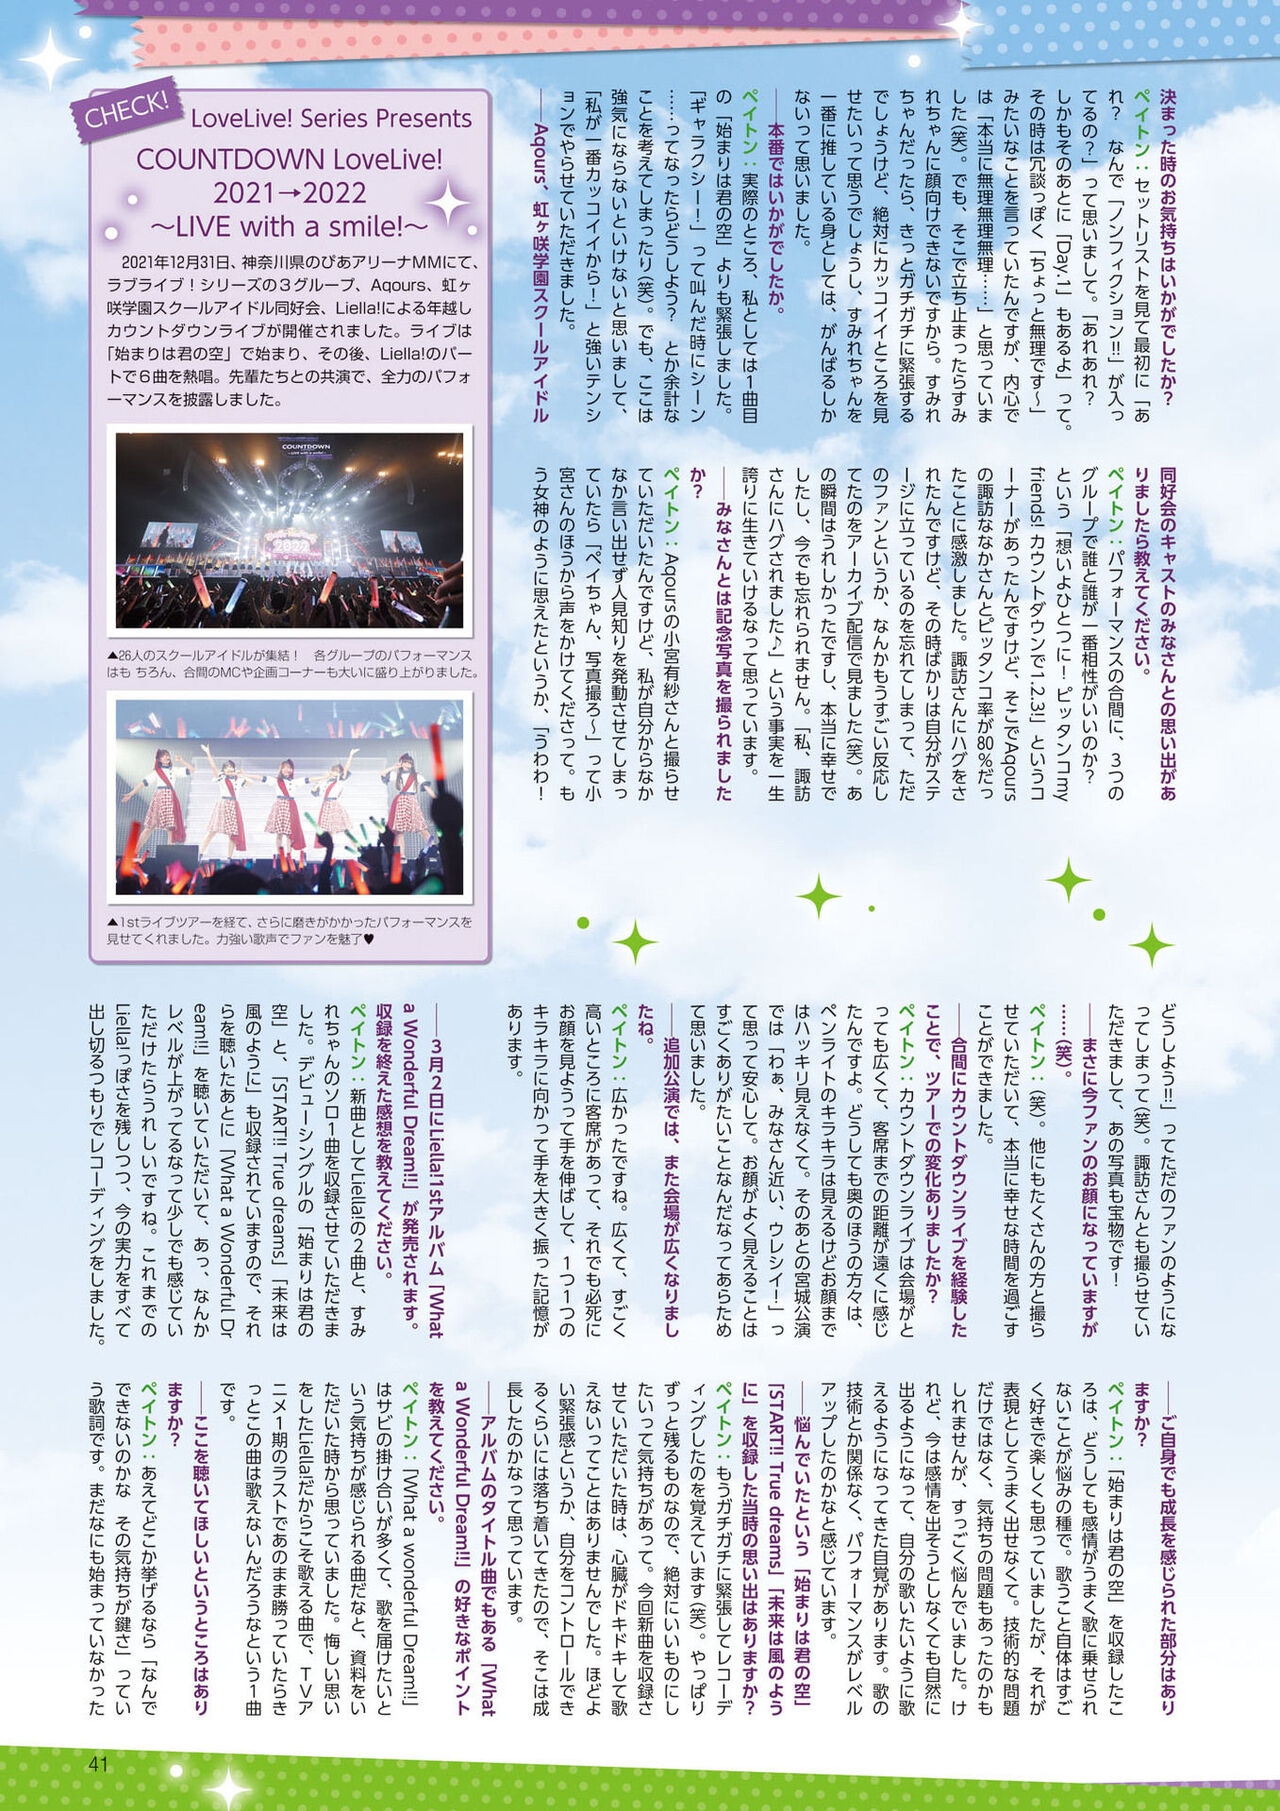 Dengeki G's Magazine #297 - April 2022 38